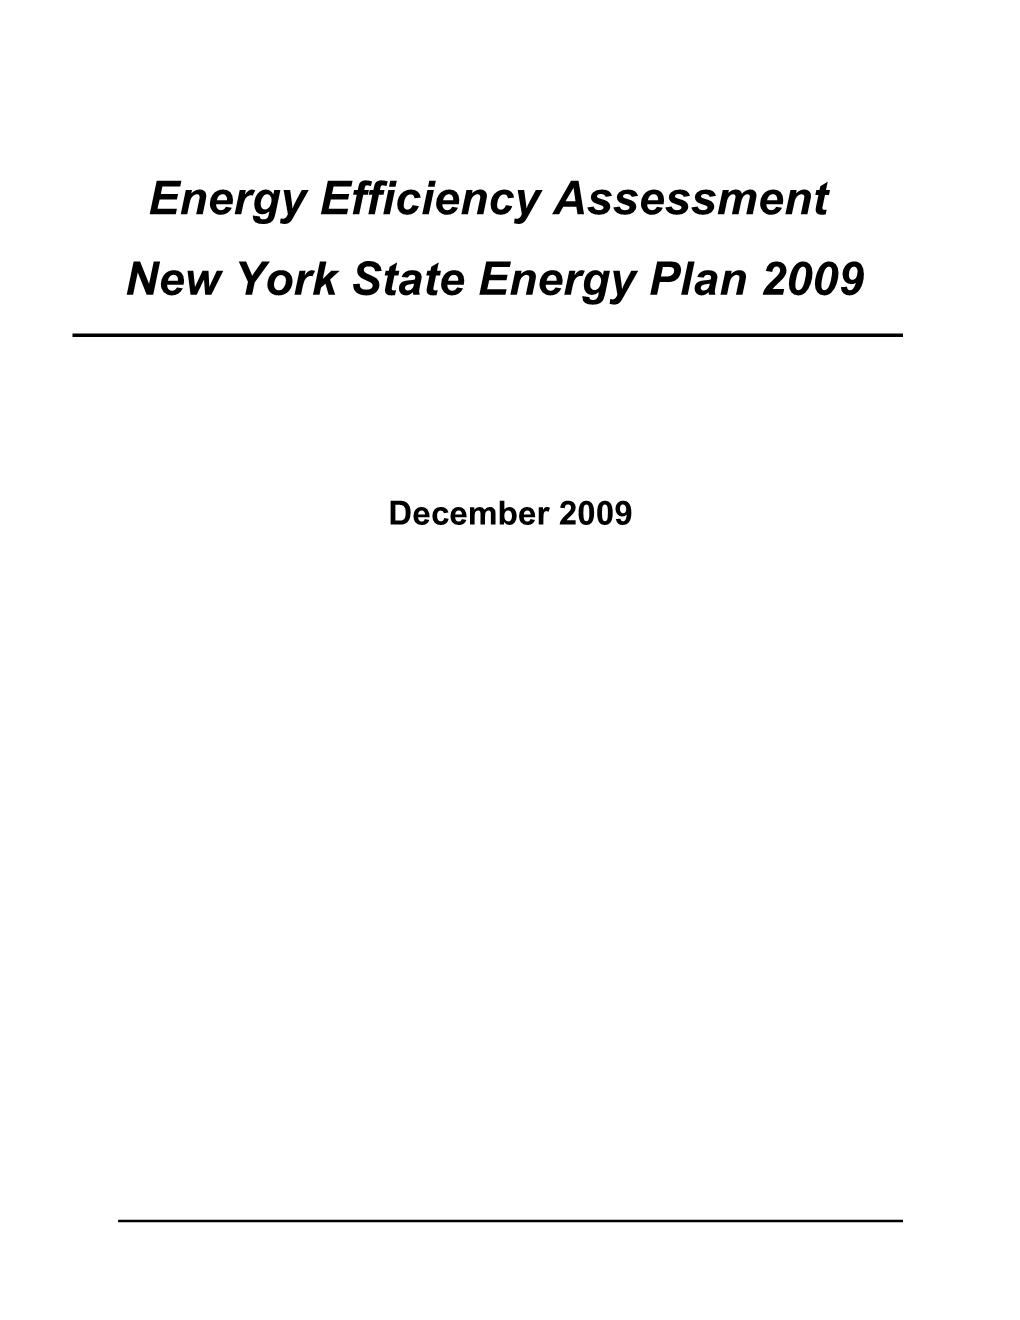 Energy Efficiency Assessment New York State Energy Plan 2009